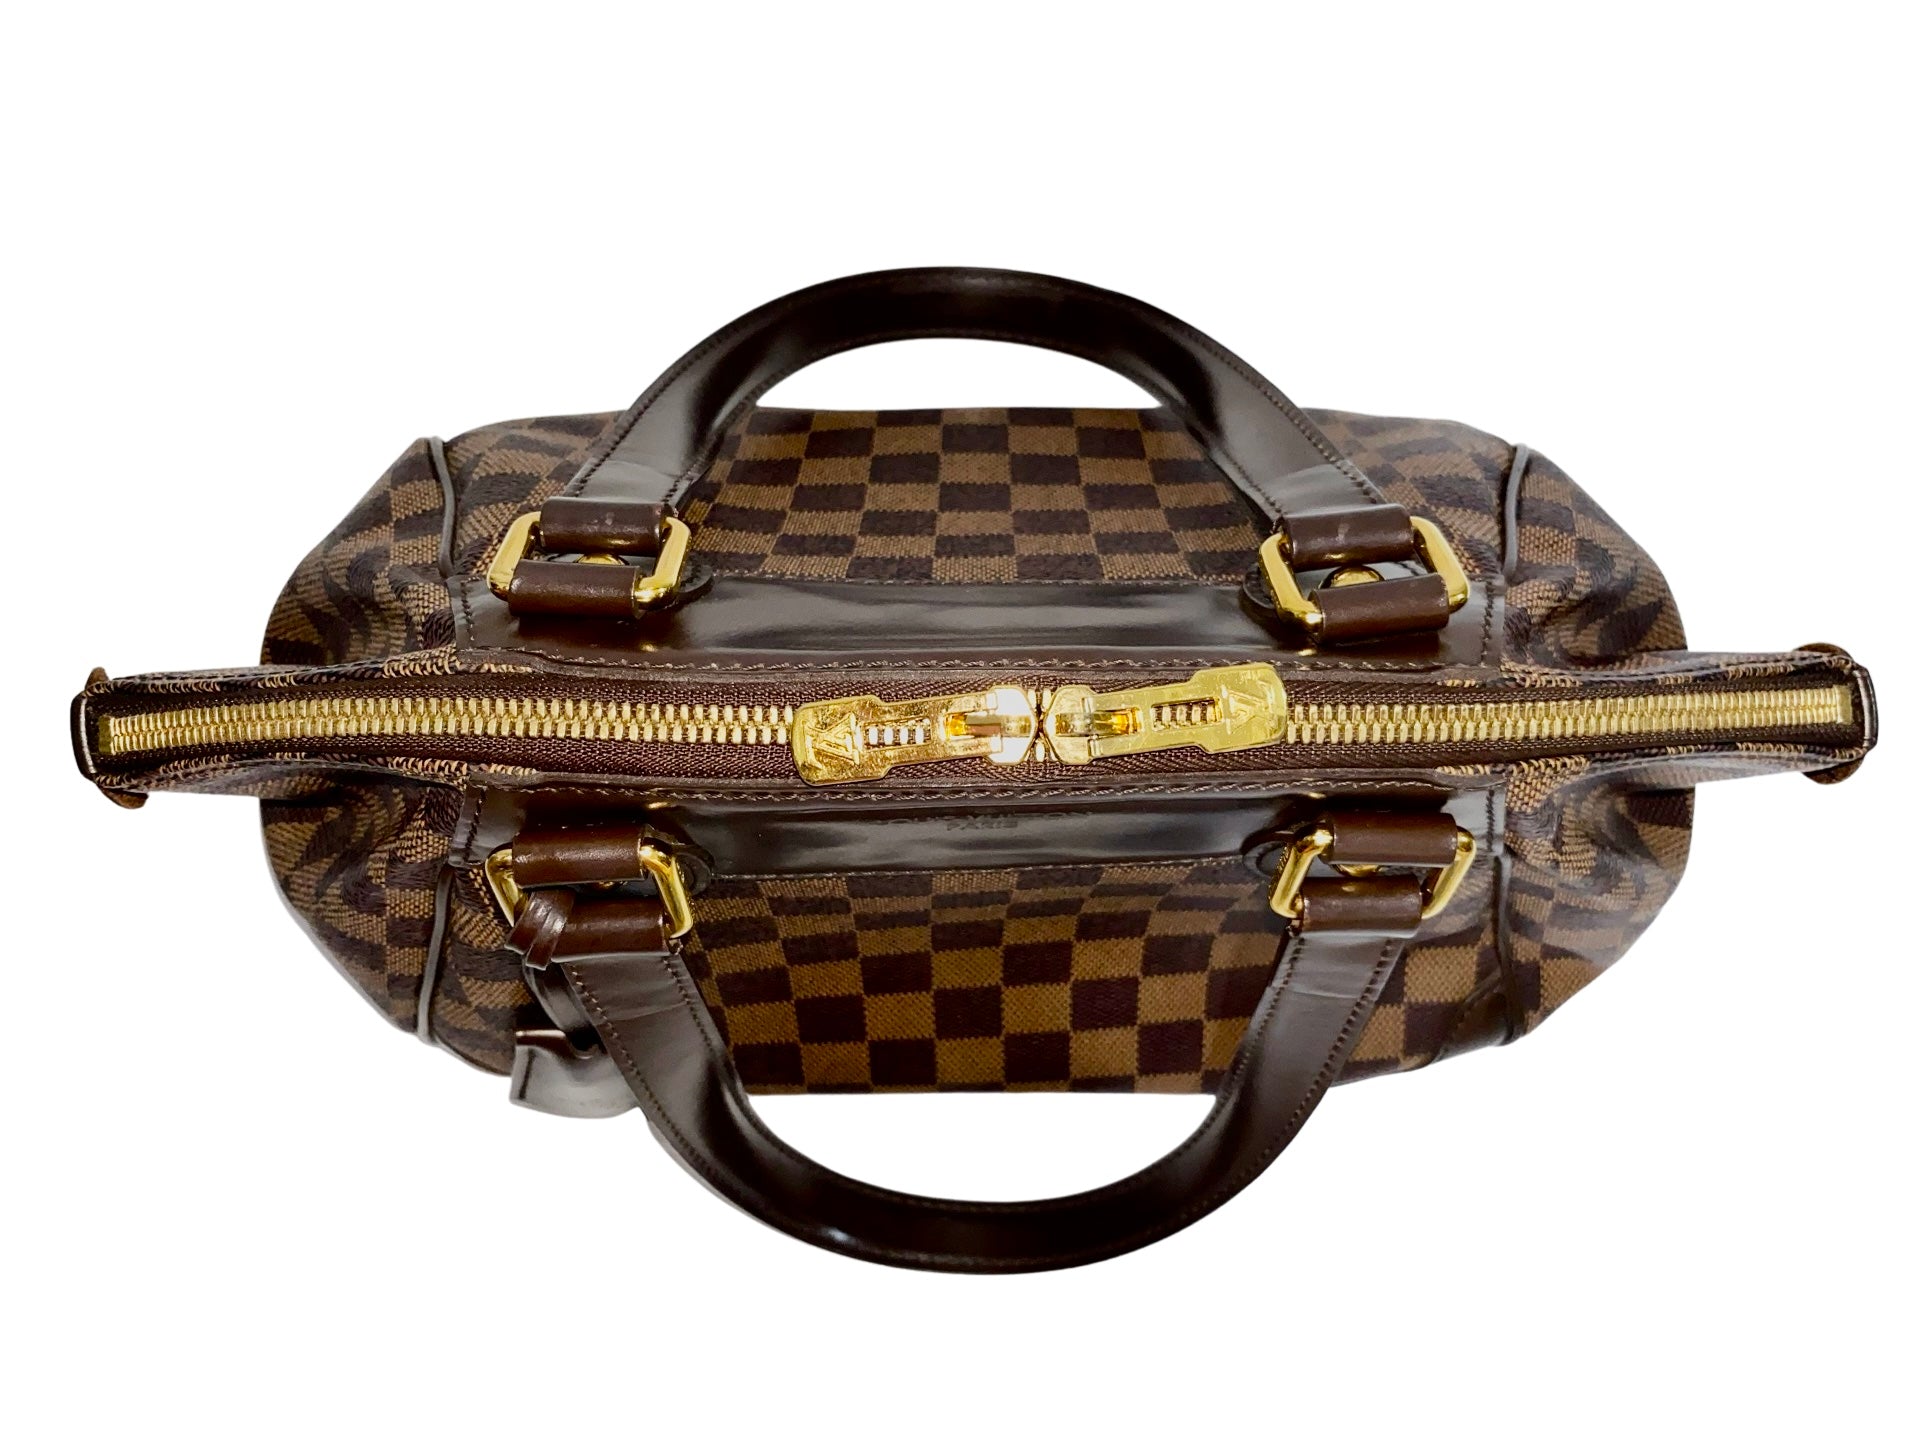 VERONA, ITALY - CIRCA MAY, 2019: Handbags On Display At Louis Vuitton Store  In Verona. Stock Photo, Picture and Royalty Free Image. Image 135603848.